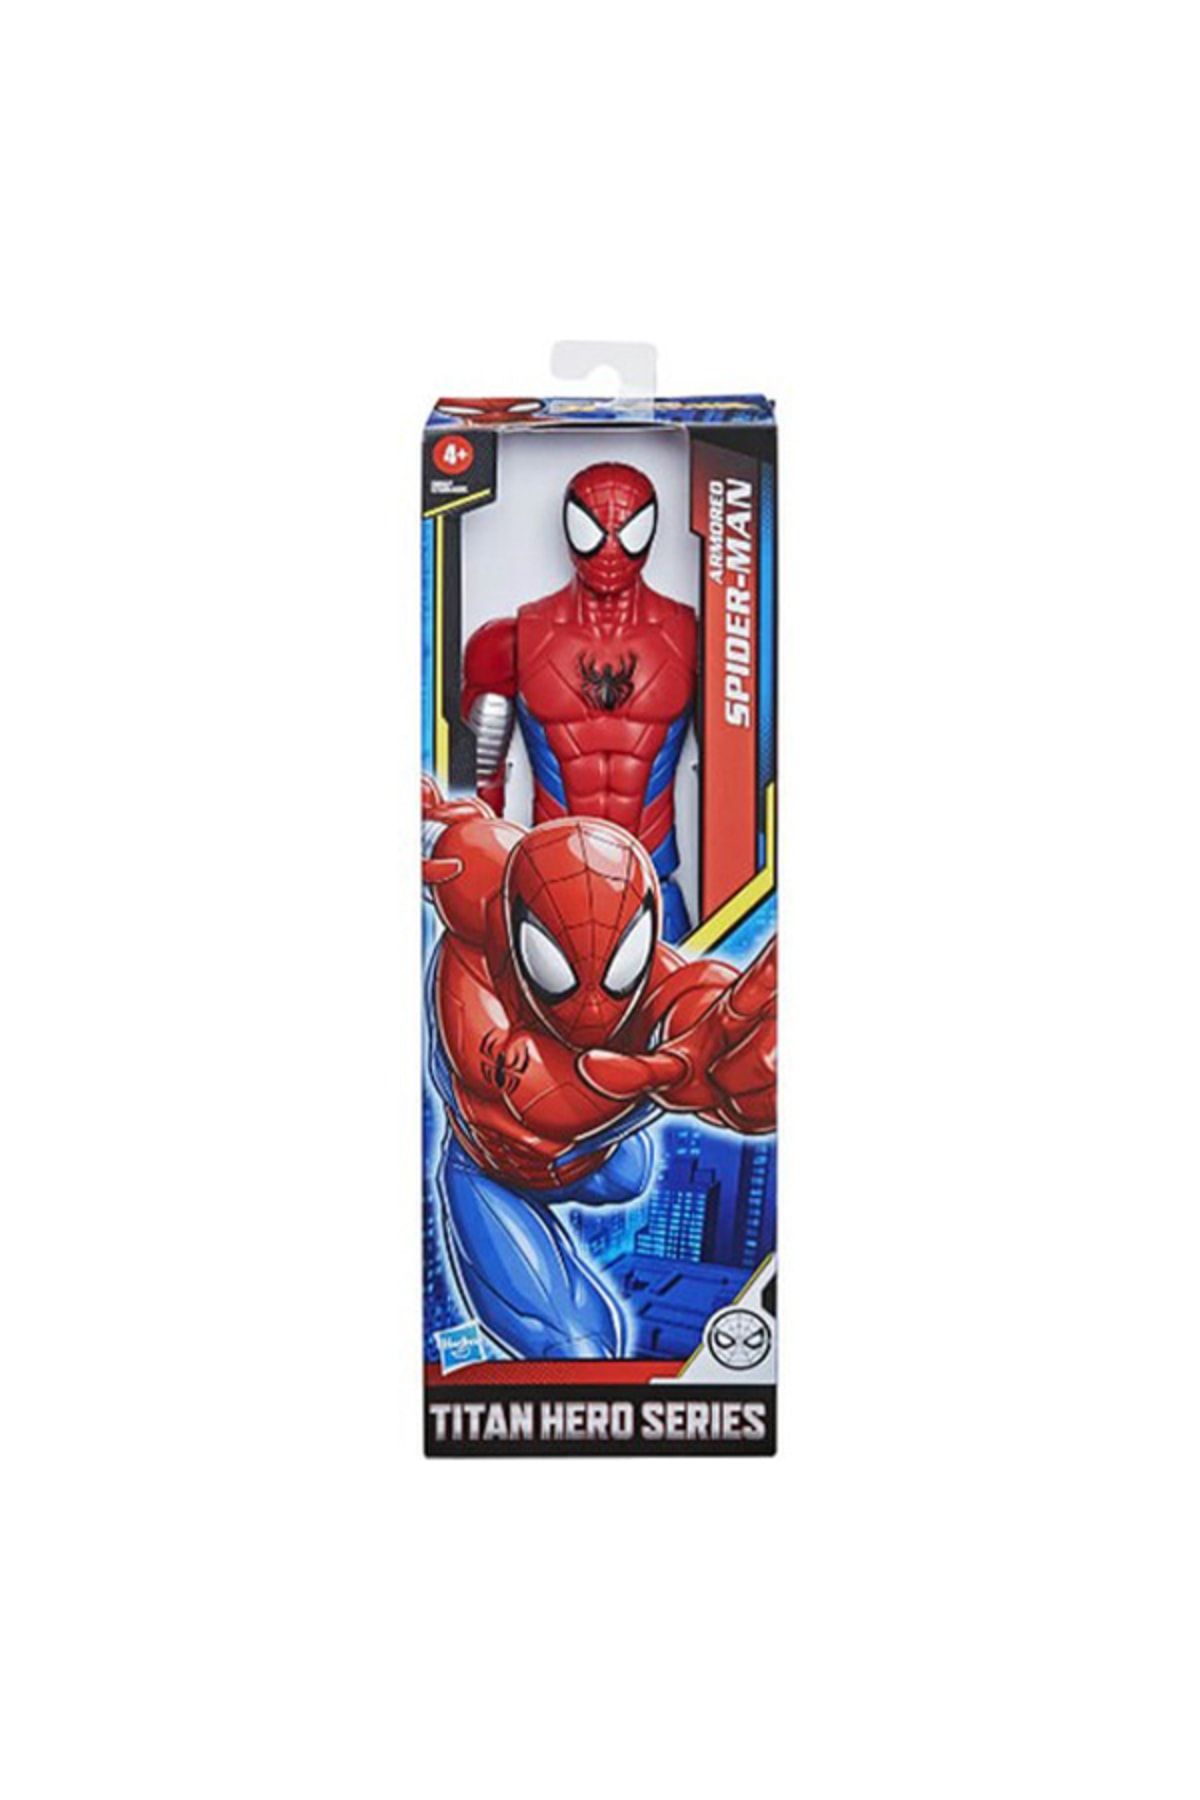 Hasbro Spider man Titan Hero Web Warriors Figür E7329-e8522 Armored Spider man